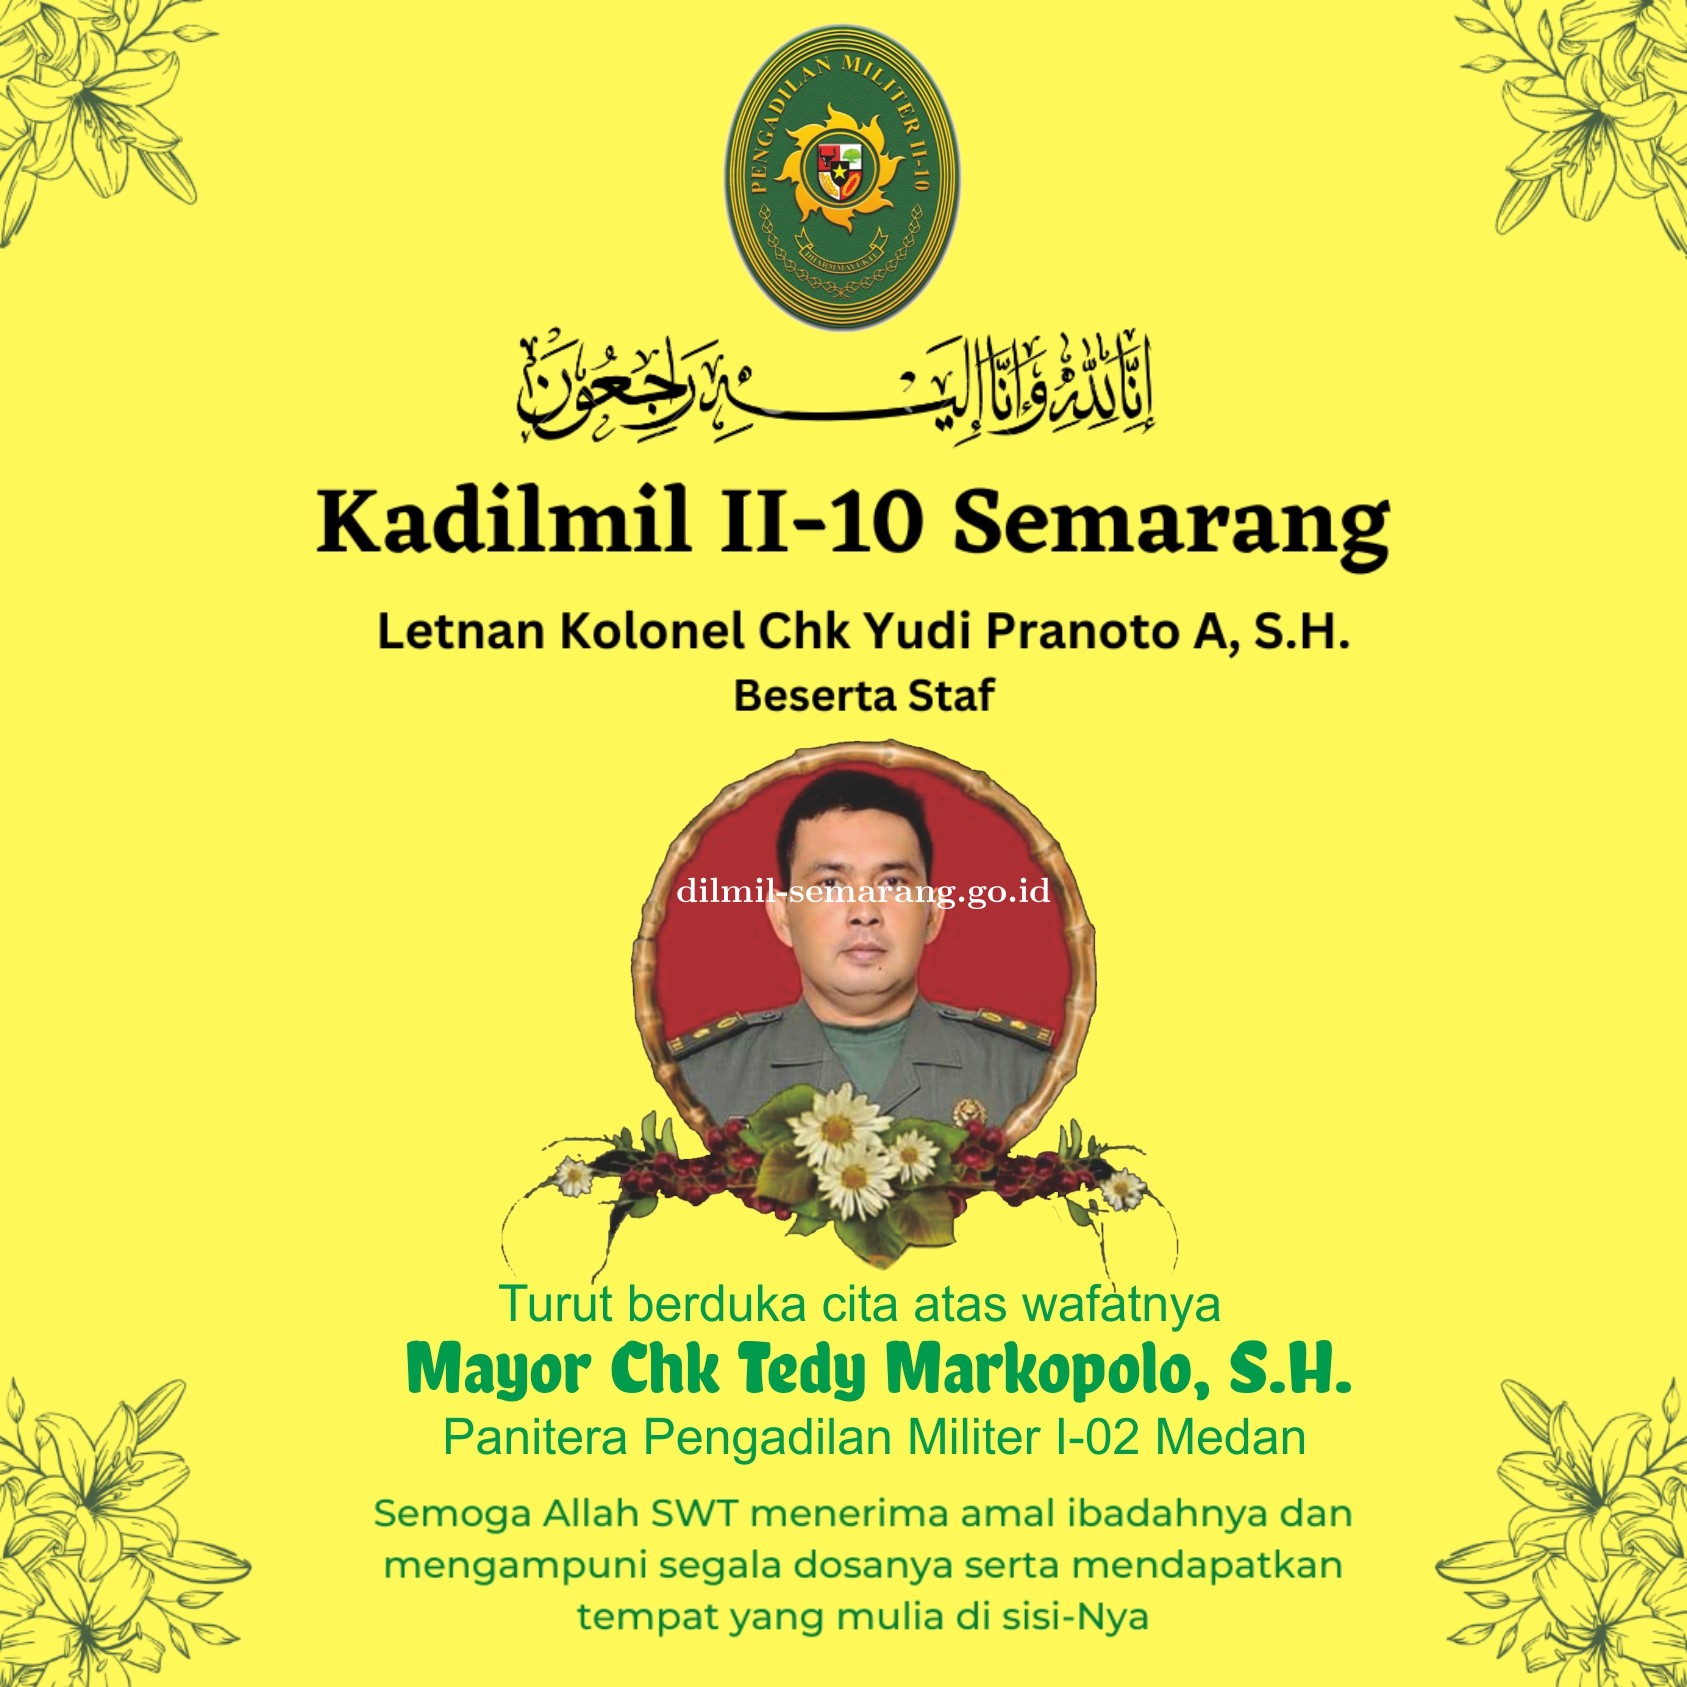 Turut berduka atas wafatnya Mayor Chk Tedy Markopolo, S.H. Panitera Pengadilan Militer I-02 Medan